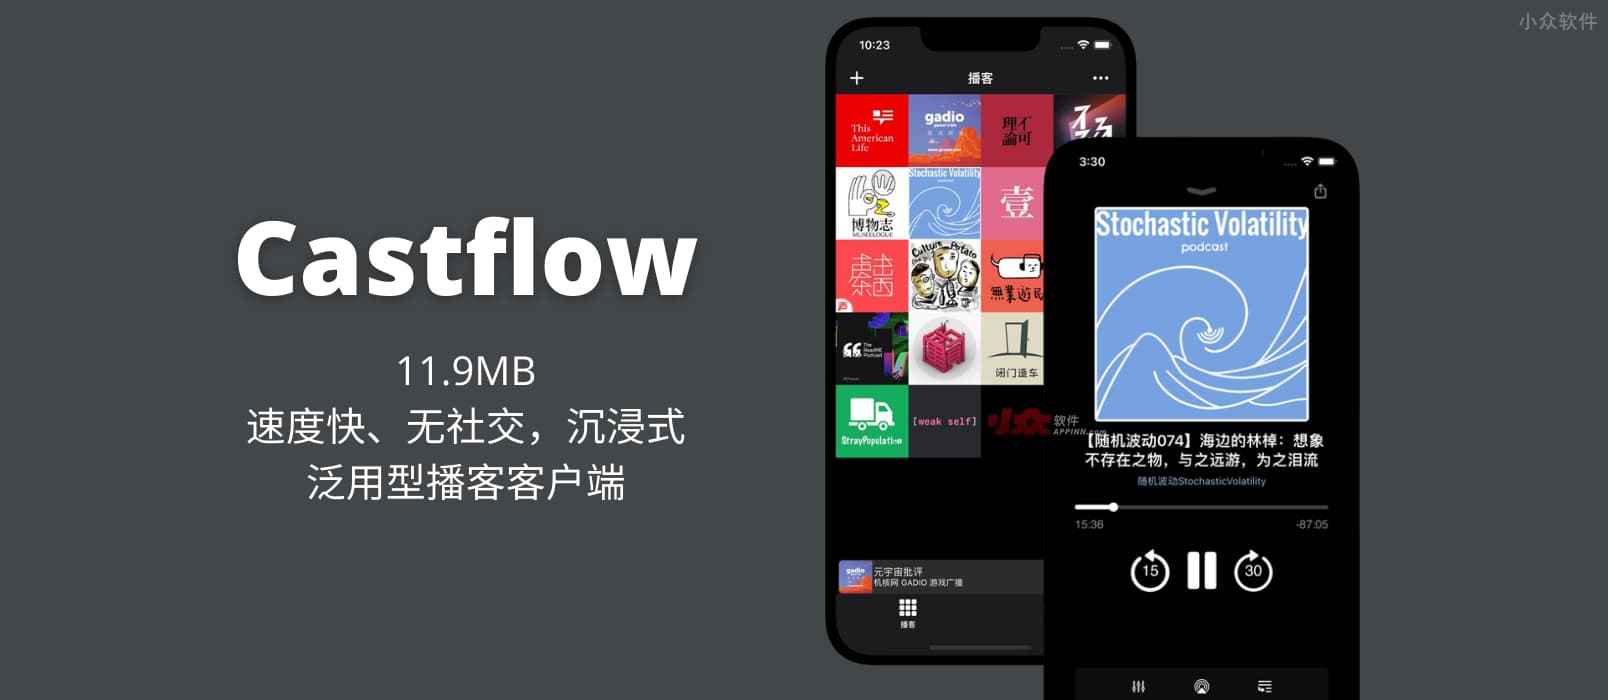 Castflow - 只有 11.9MB，速度快、无社交，沉浸式泛用型播客客户端[iPhone]